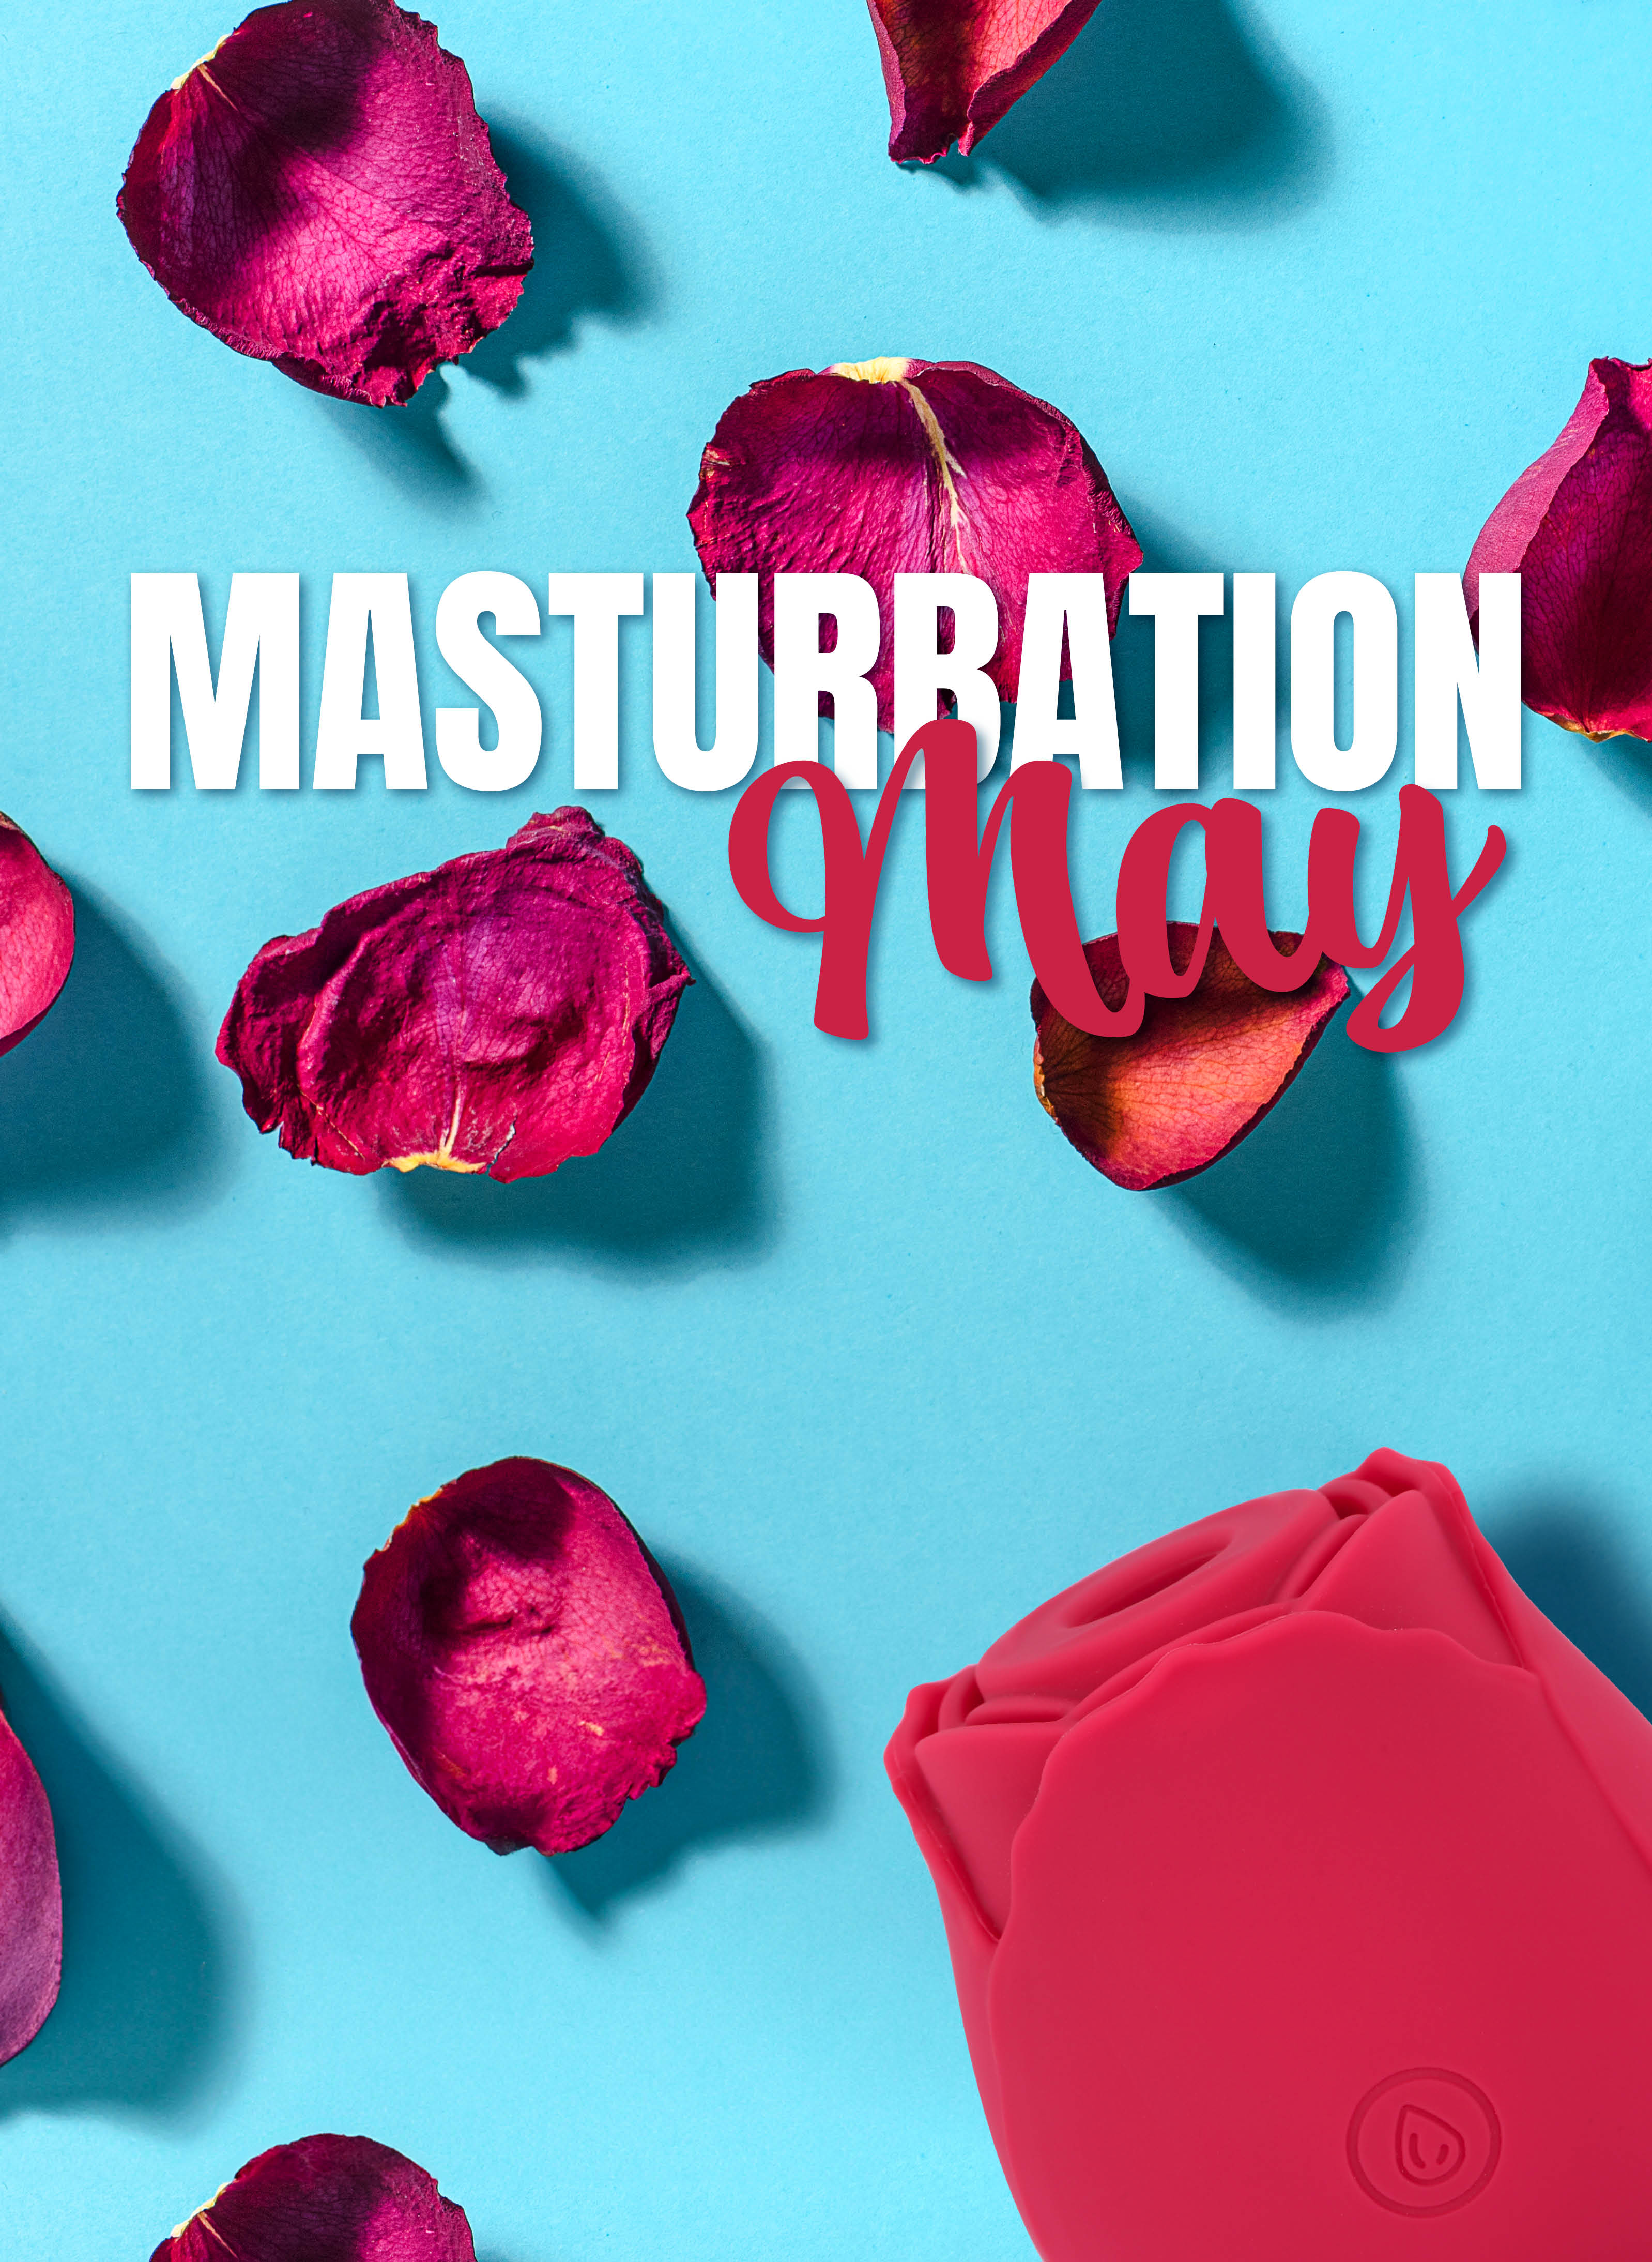 Simply Pleasure Promotional Image - Rosebud Vibrator - Masturbation May - 10% Off - Mobile